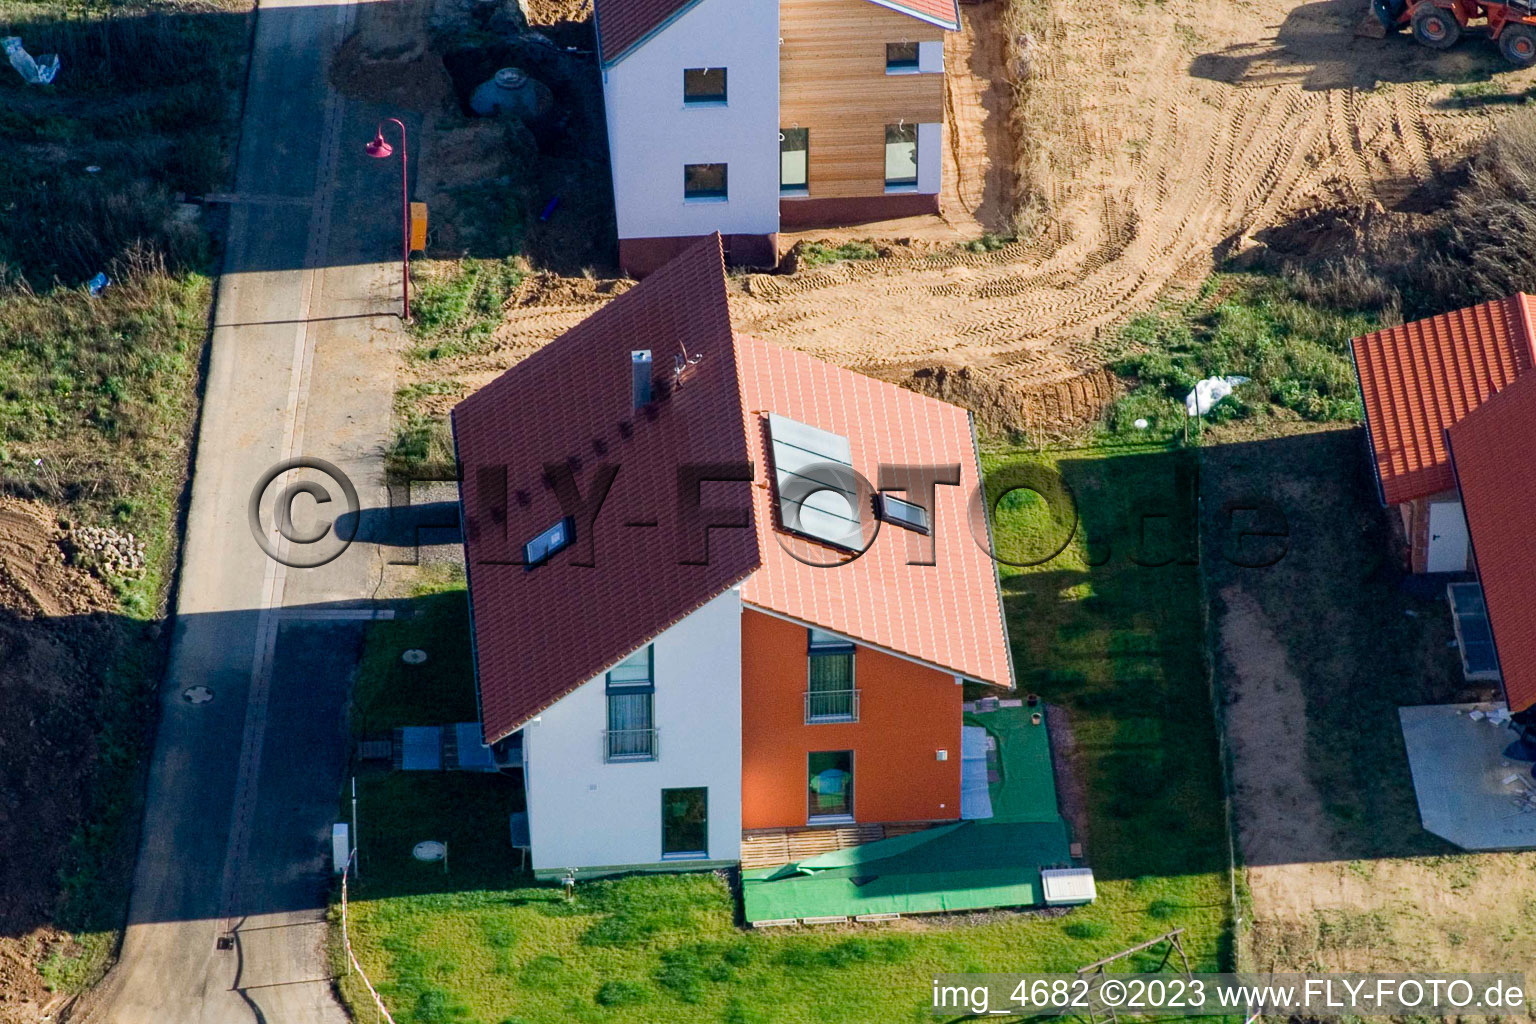 Drone image of Brotäcker new development area in Steinweiler in the state Rhineland-Palatinate, Germany